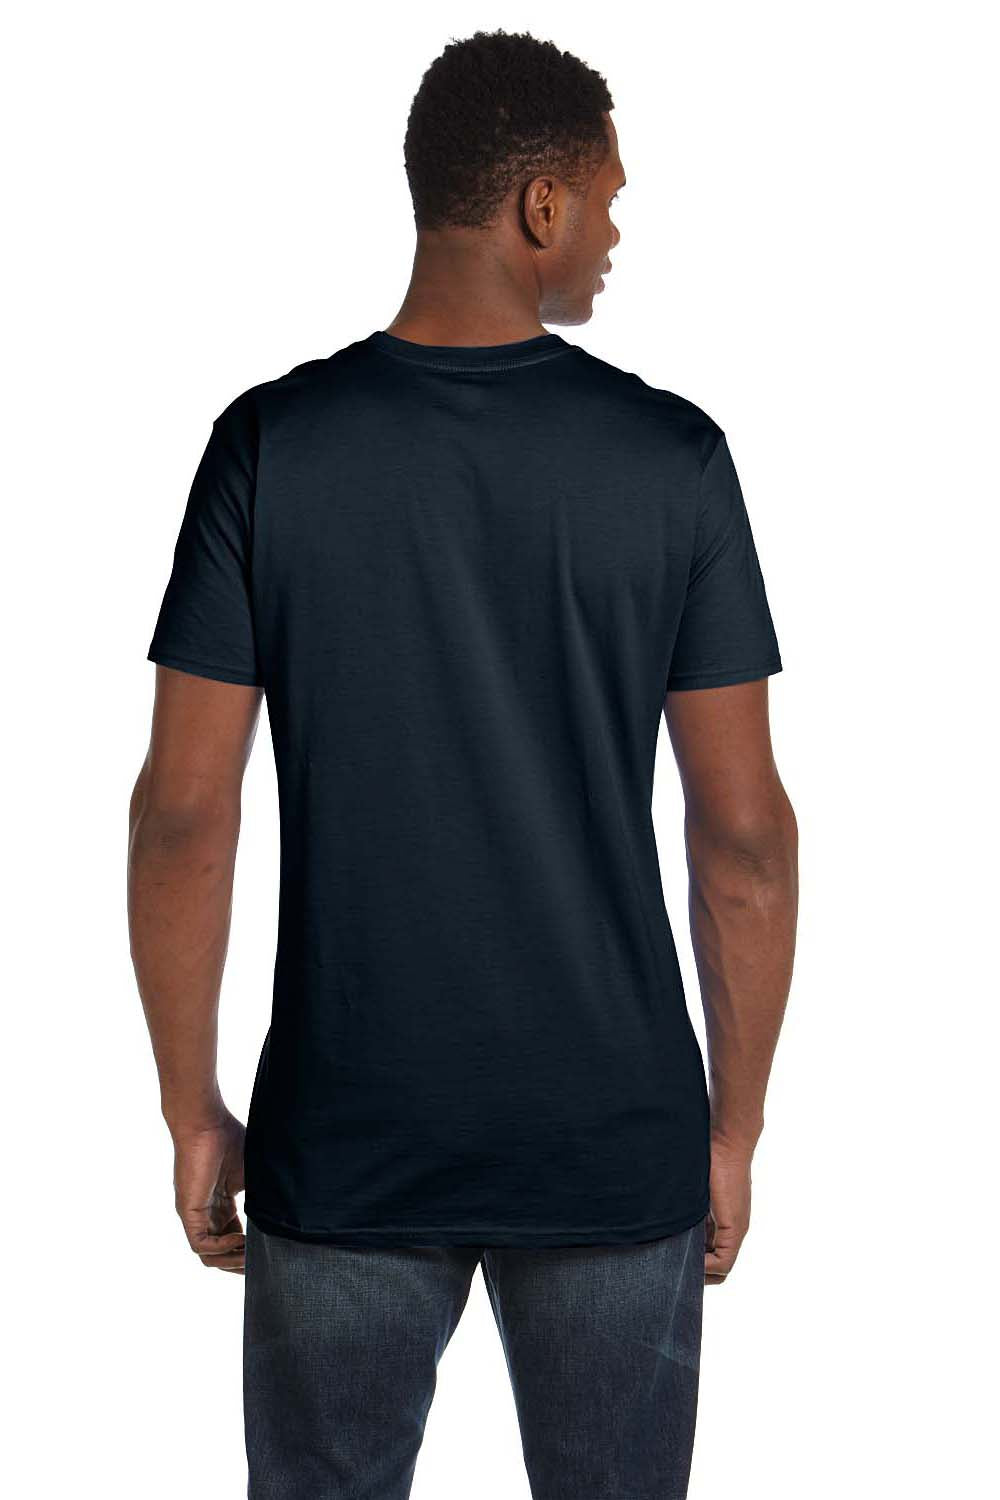 Hanes 4980 Mens Nano-T Short Sleeve Crewneck T-Shirt Vintage Black Back